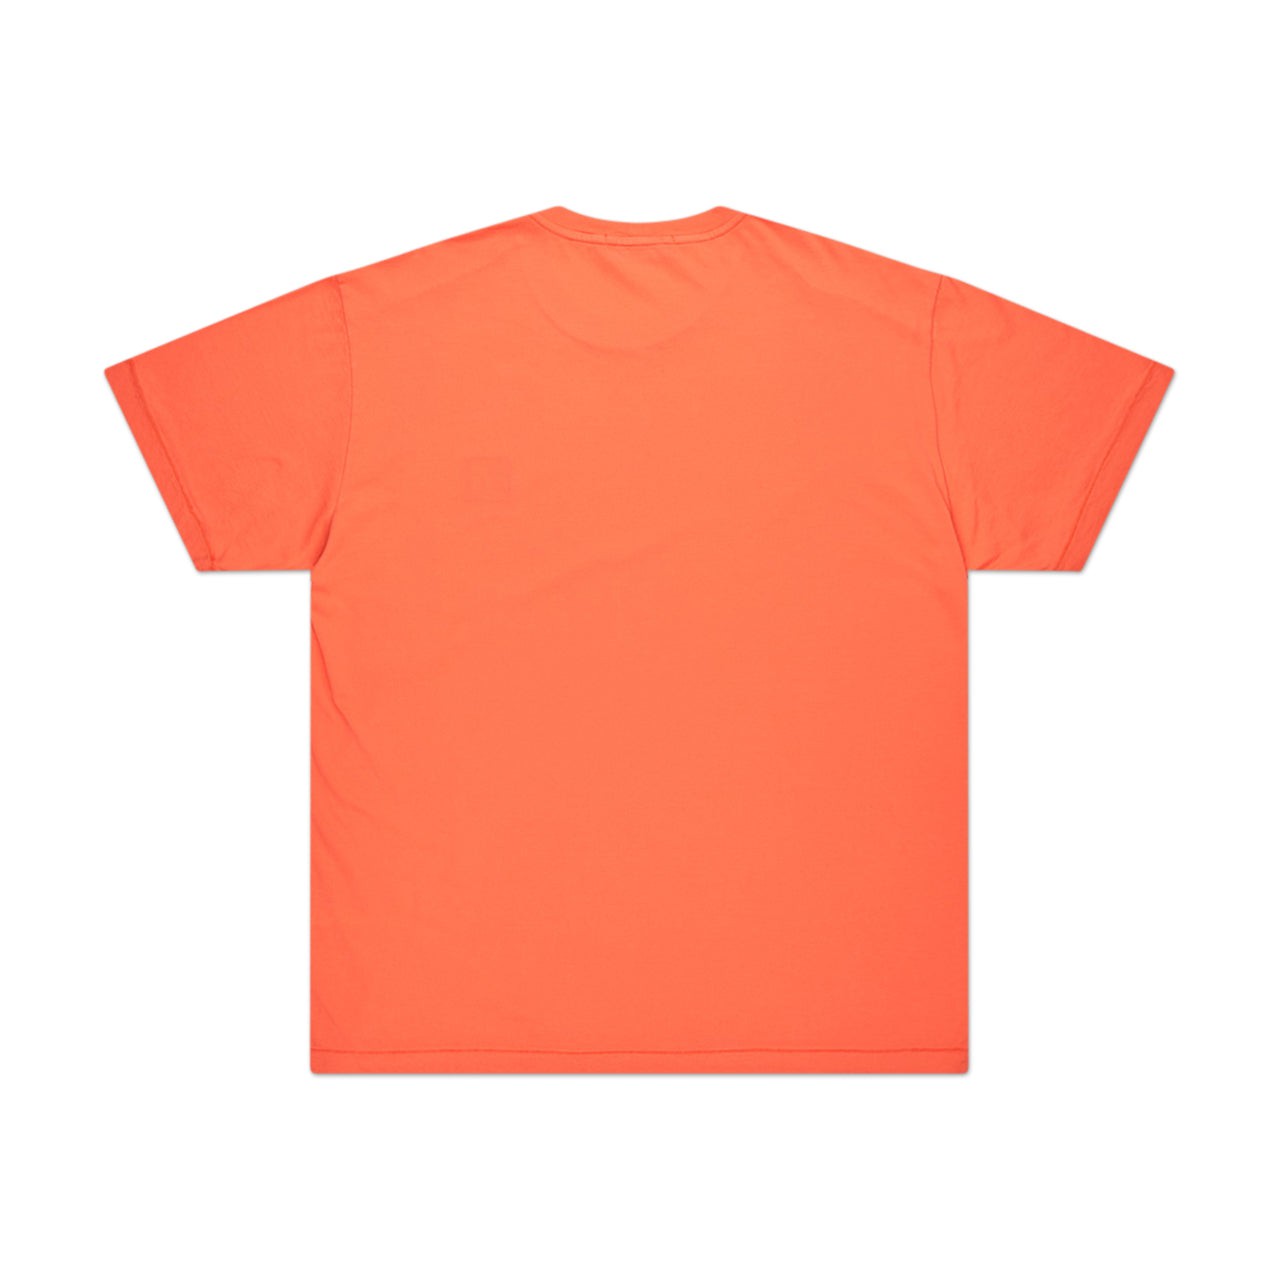 stone island stone island cotton t-shirt (orange)